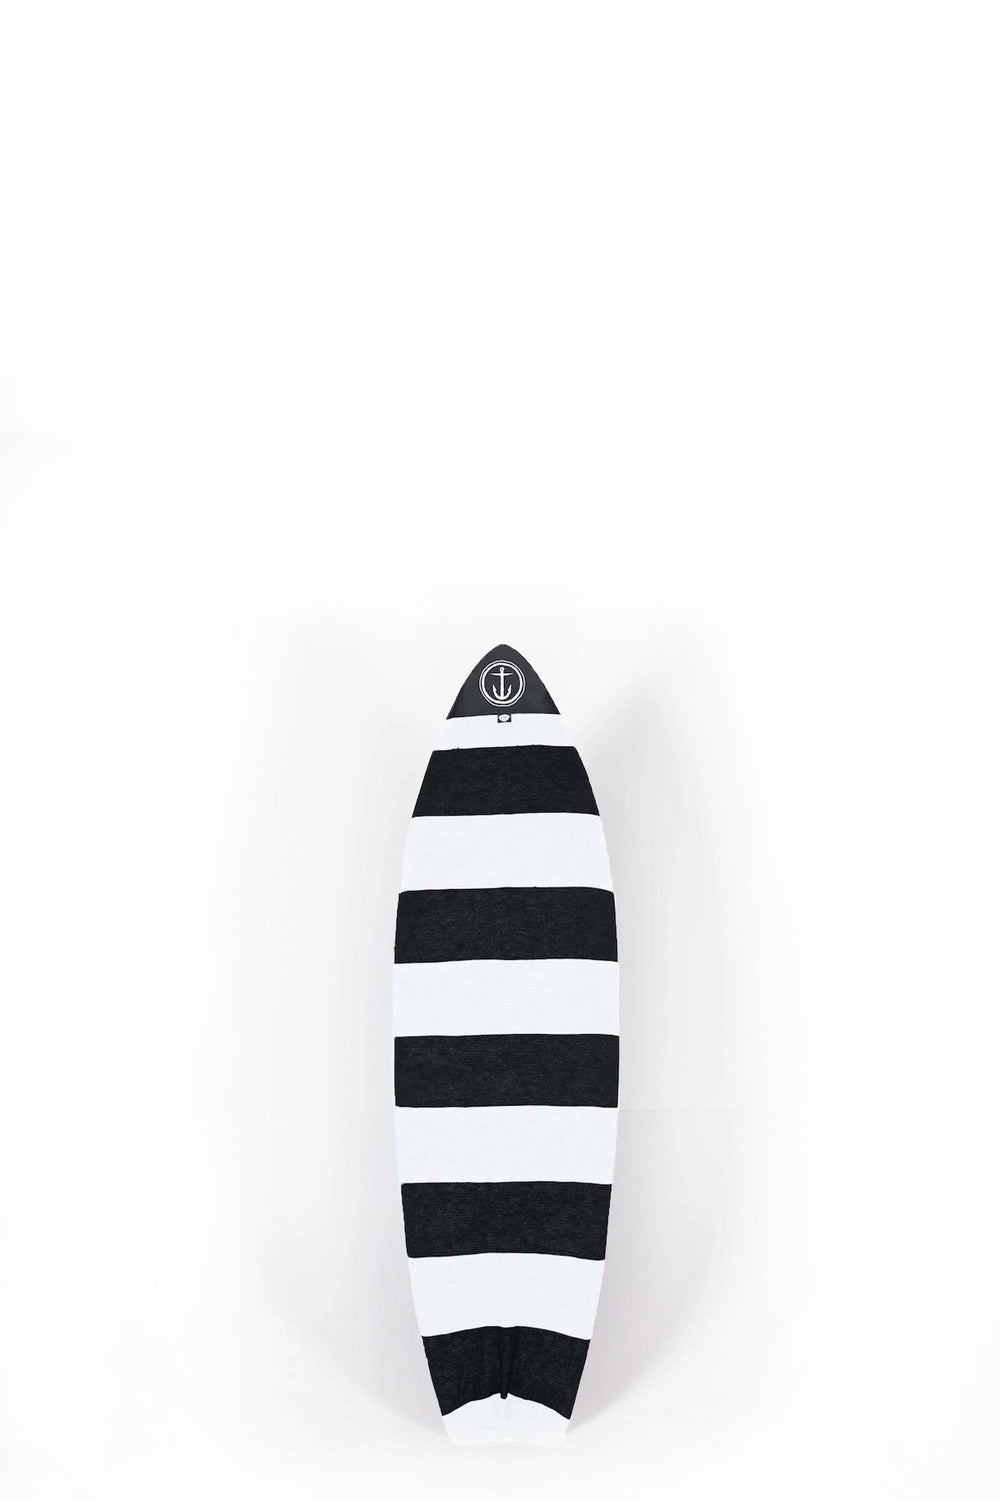 pukas-surf-shop-captain-fin-boardbag-sock-hybrid-5_2